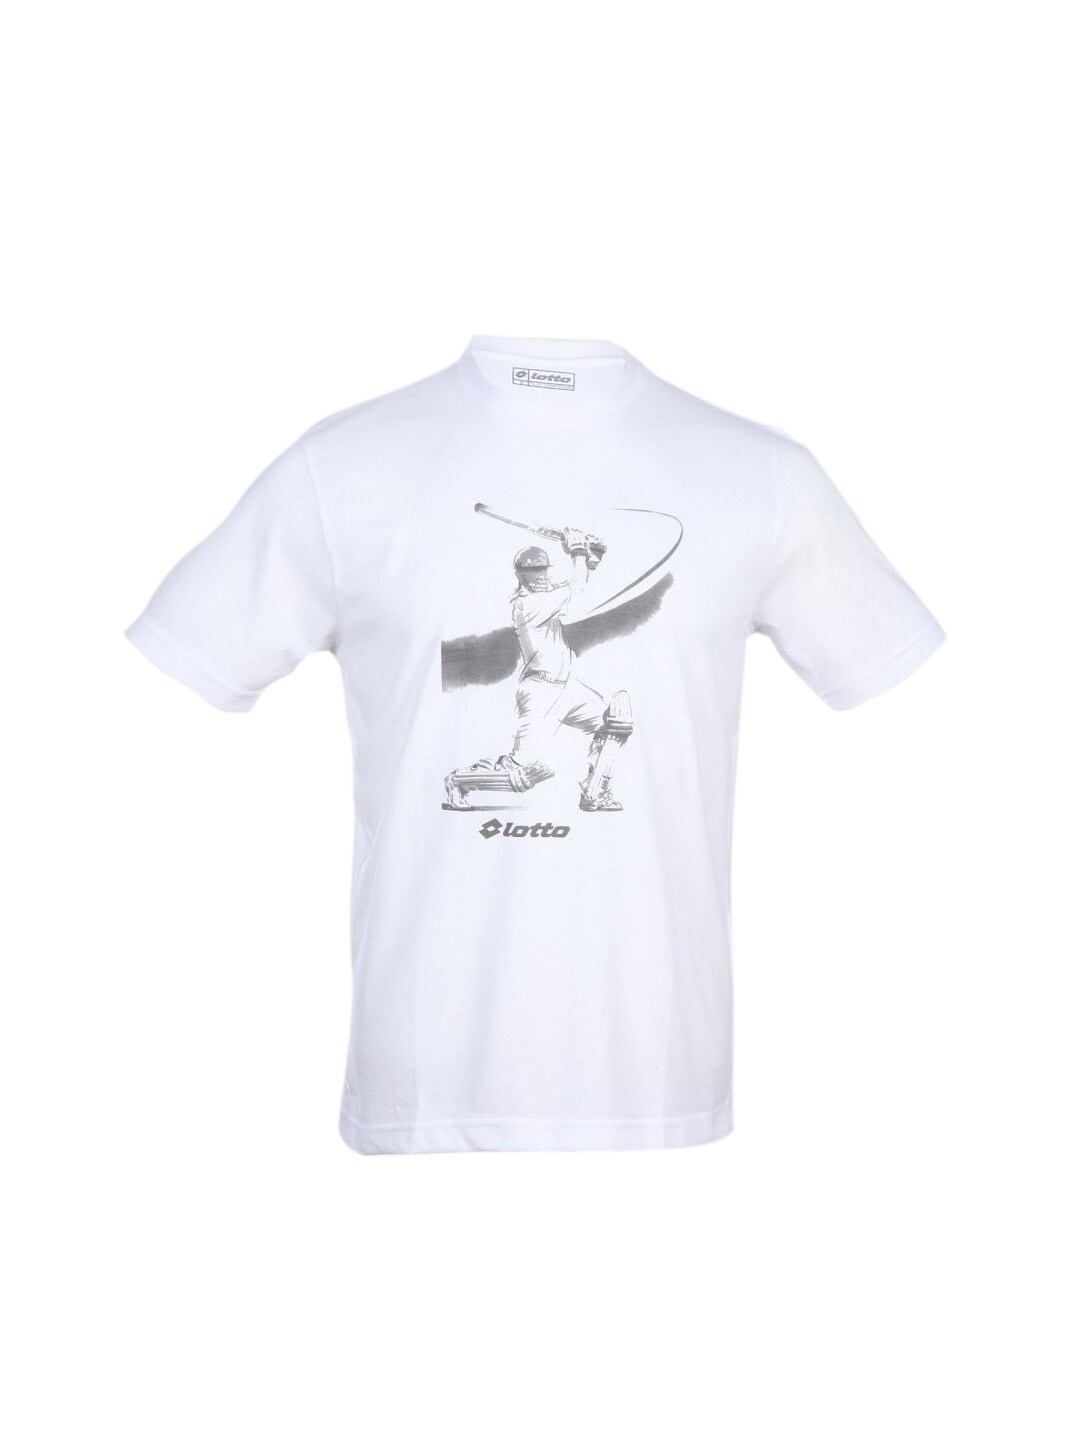 Lotto Men's Kochi Tuskers Cotton Graphic White T-shirt